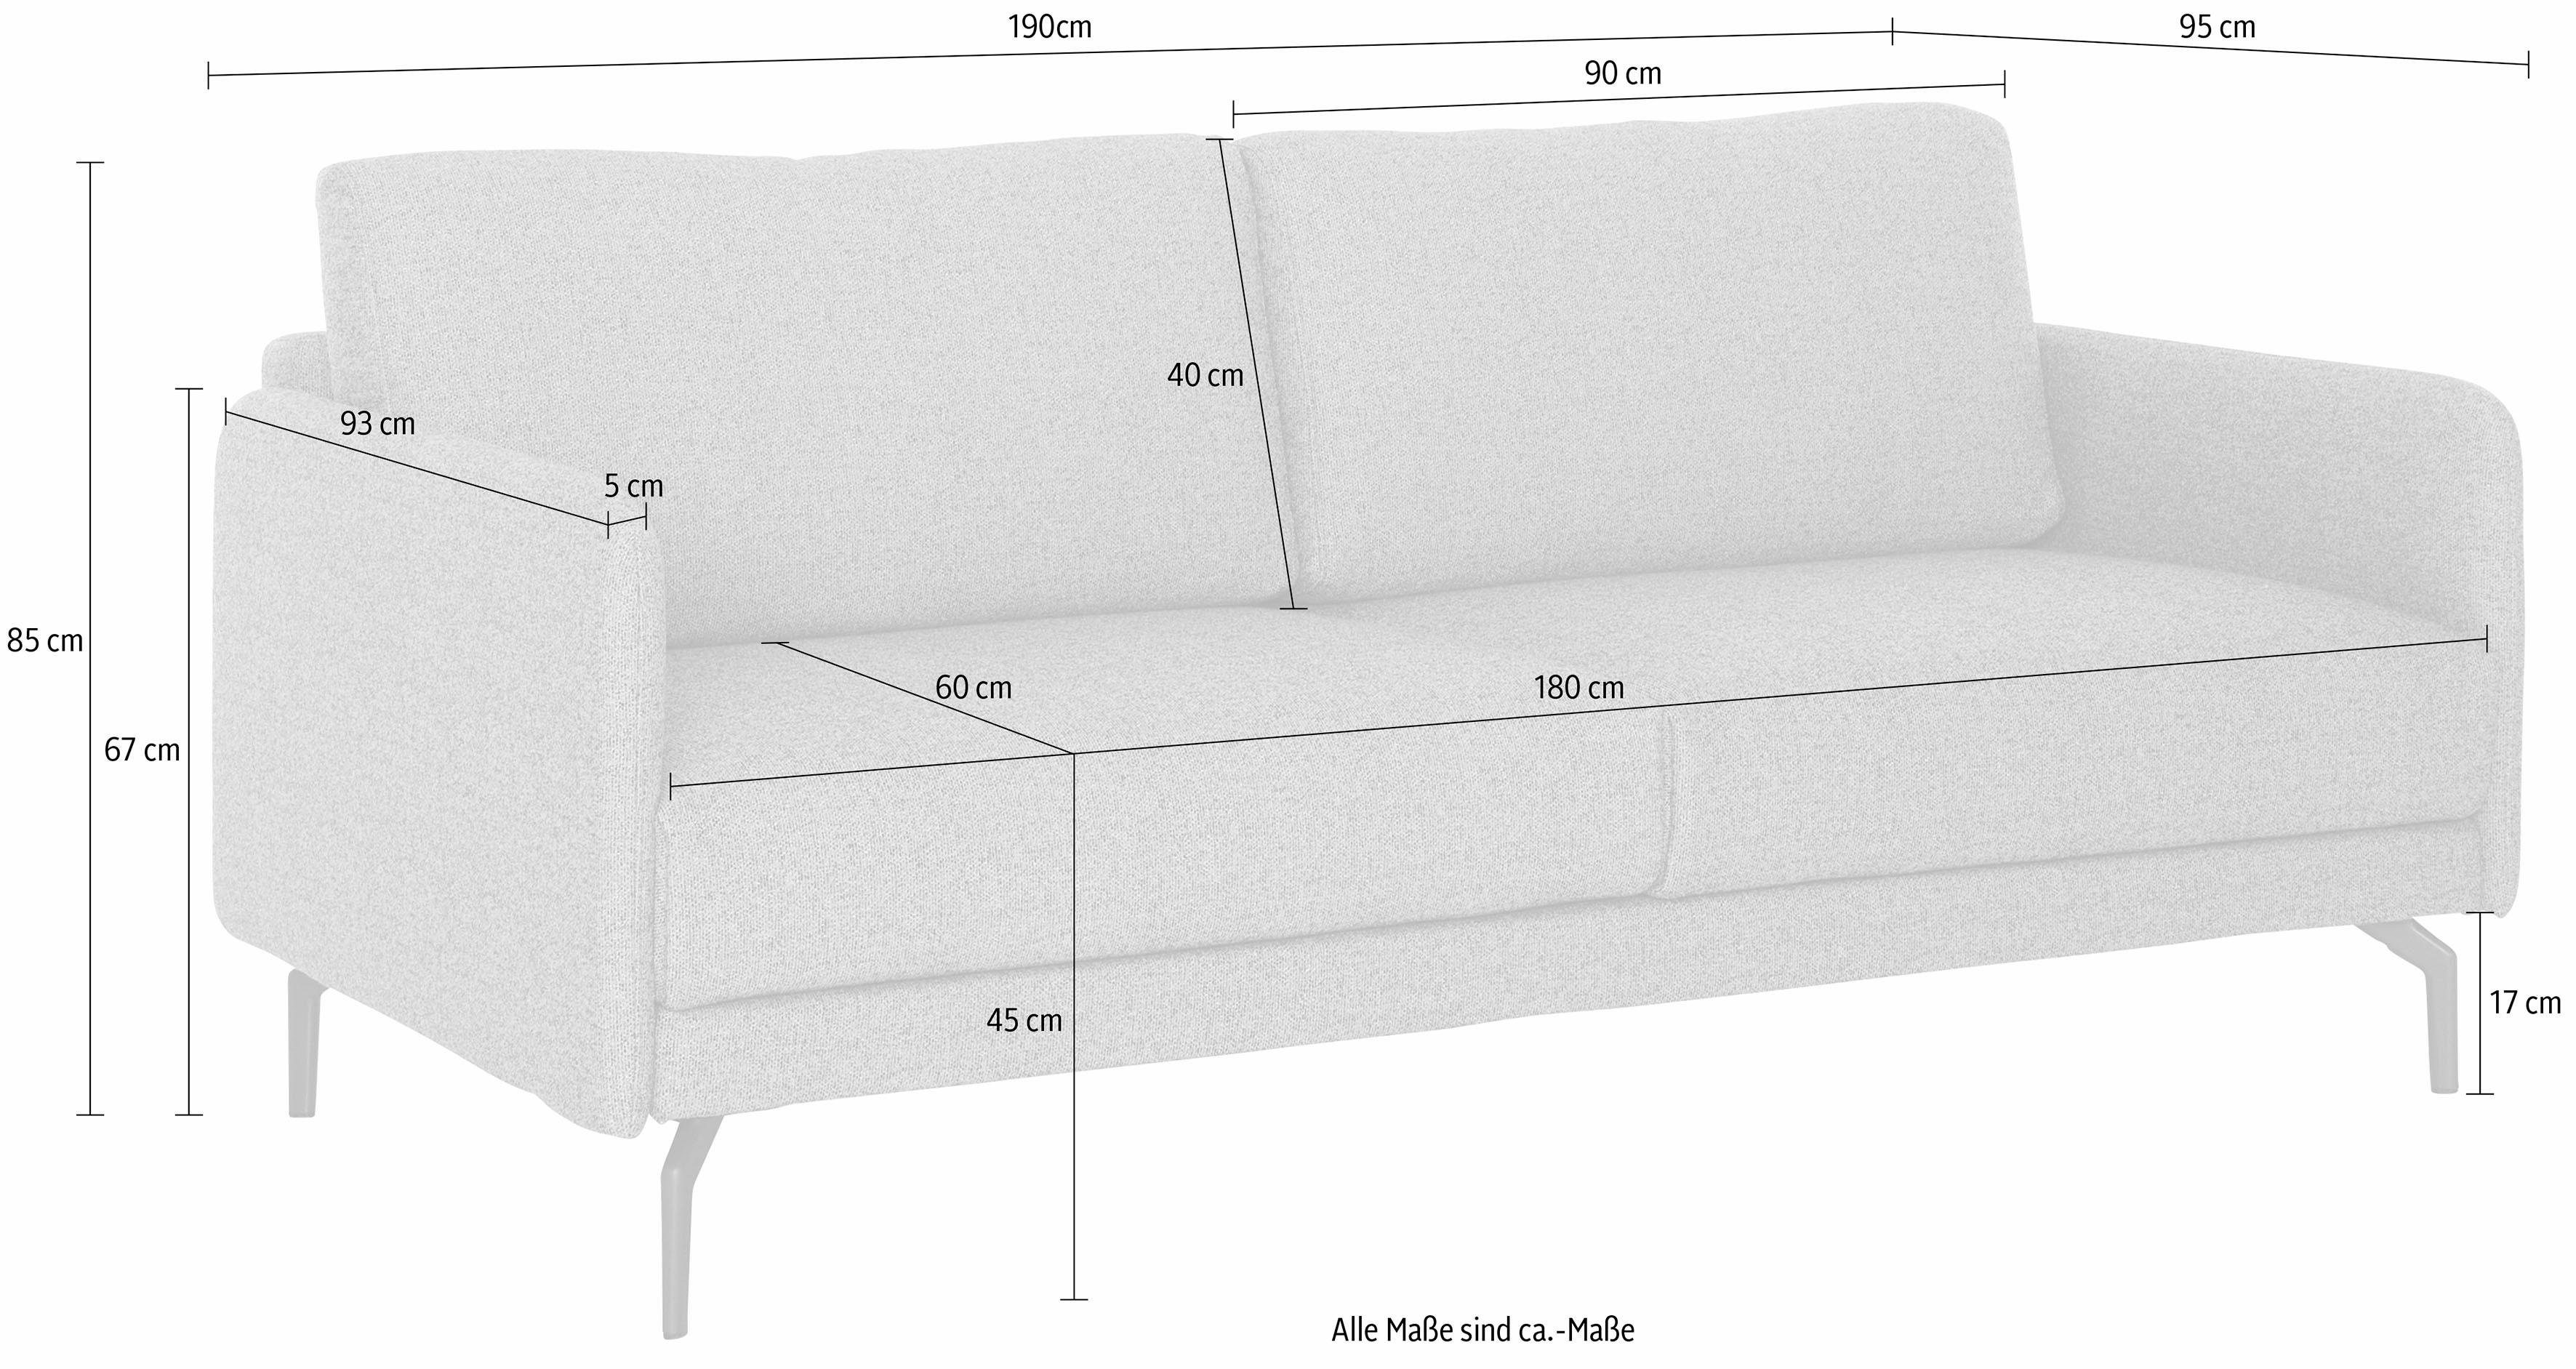 cm, sofa Umbragrau schmal, 3-Sitzer 190 Breite hülsta sehr Armlehne Alugussfuß hs.450,